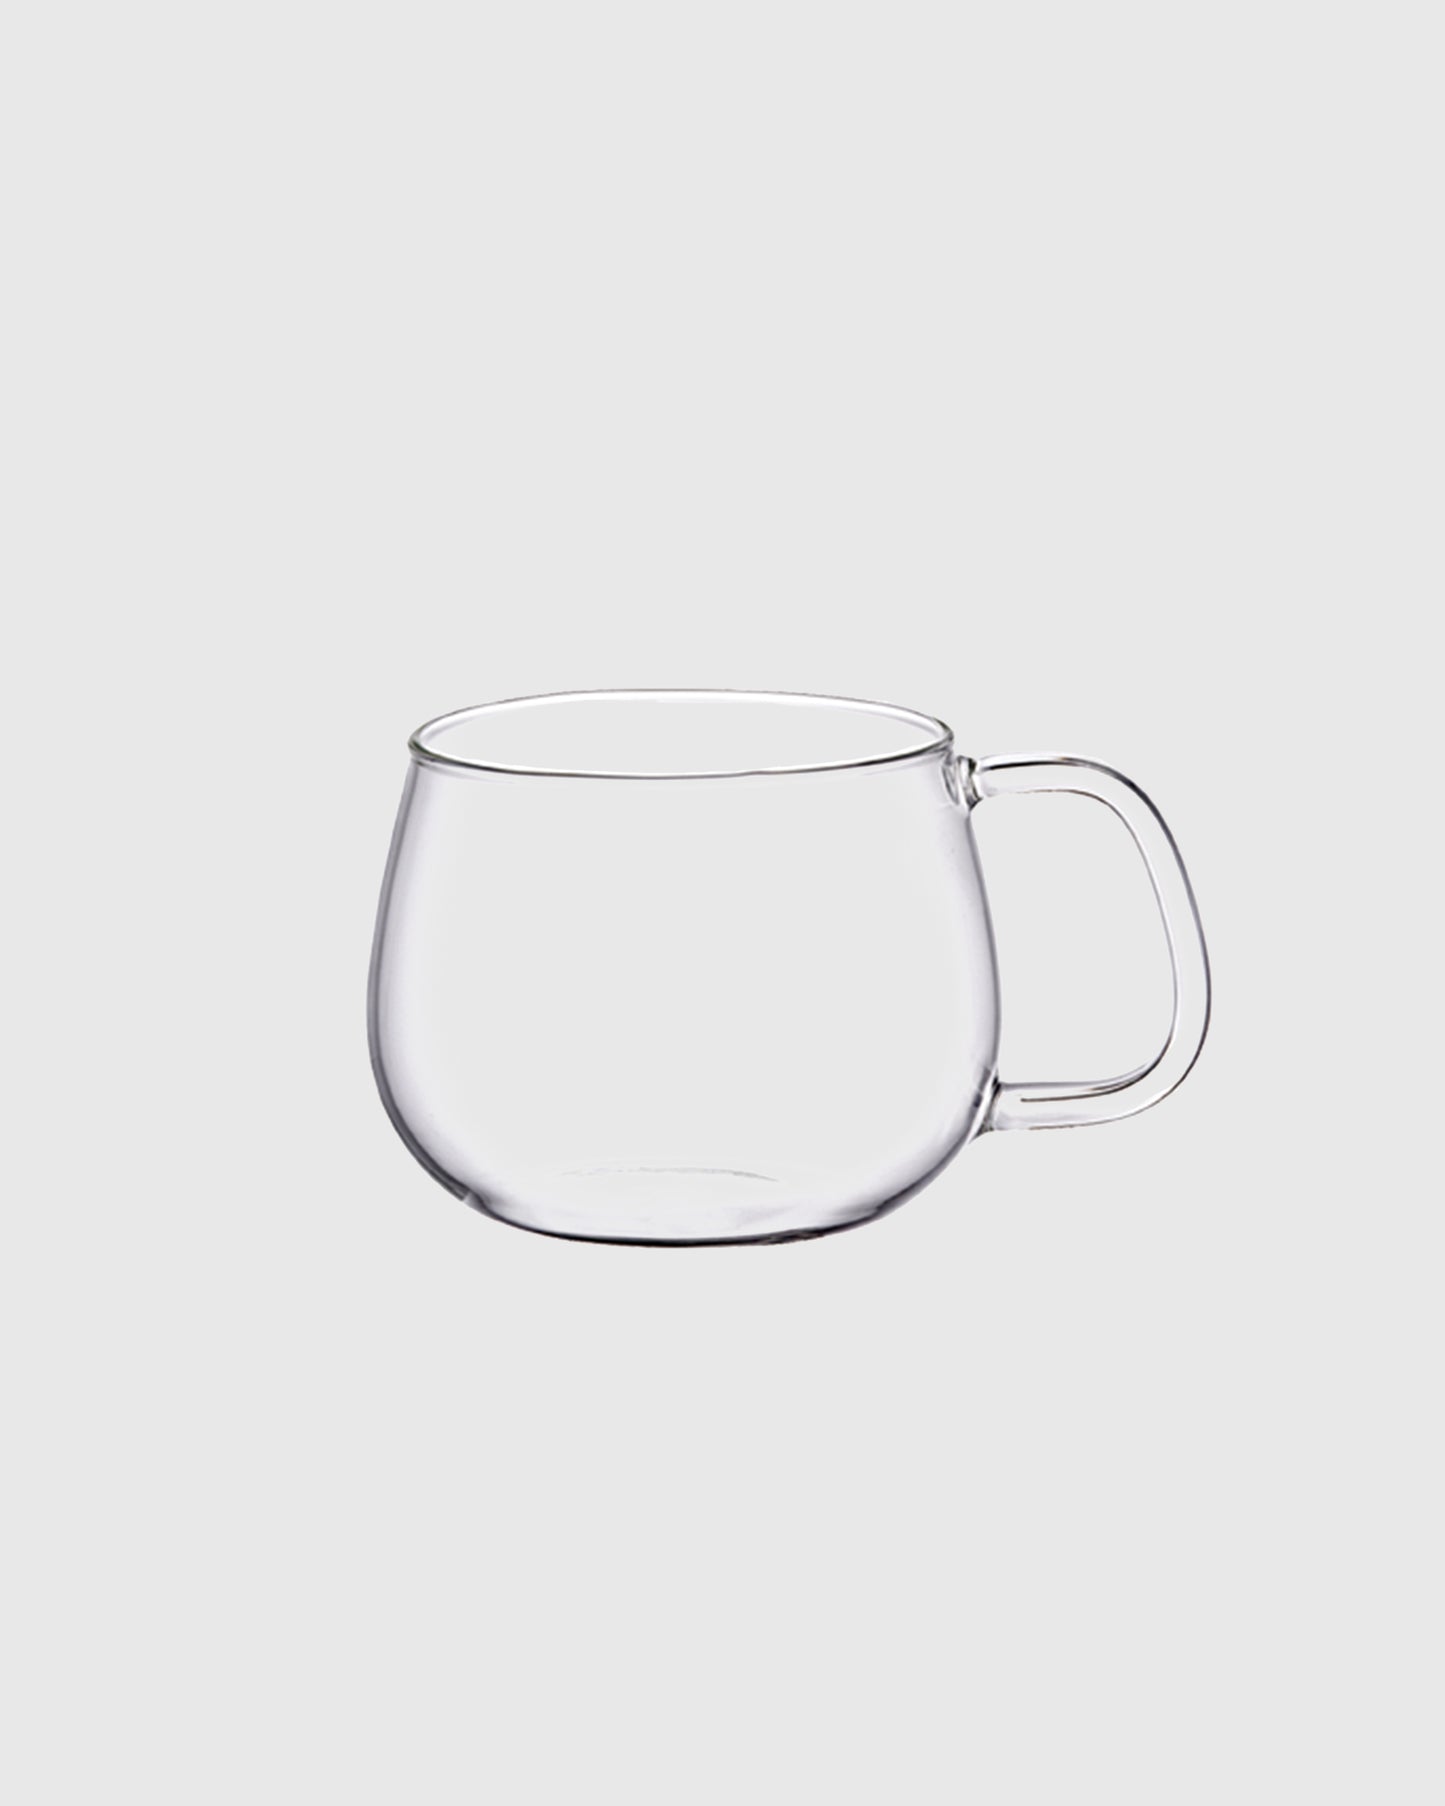 Unitea 12 oz. Glass Teacup